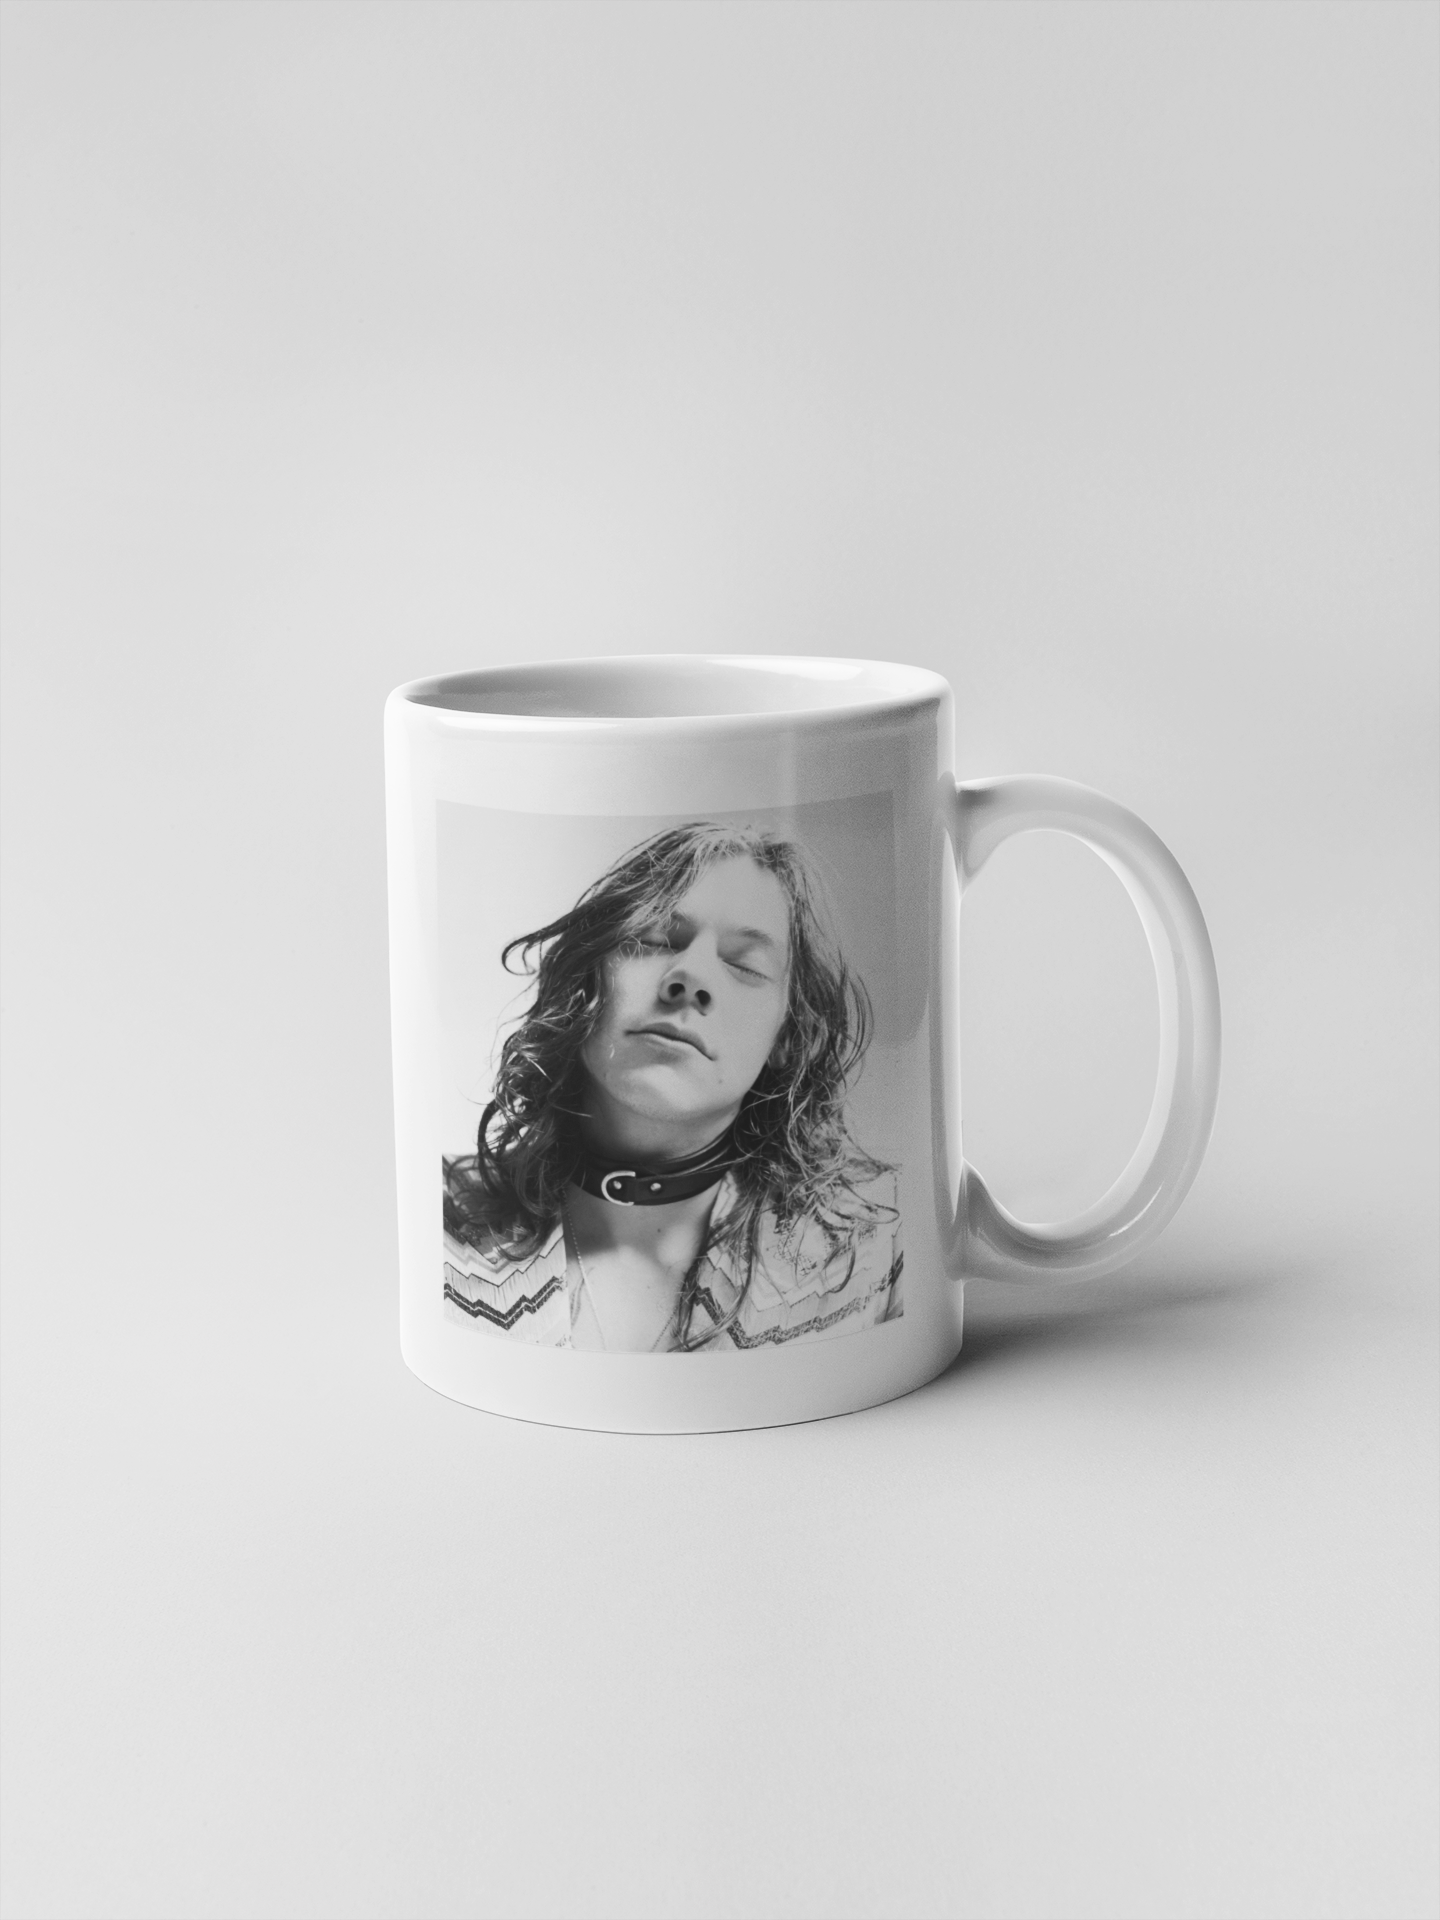 Harry Styles Another Man Long Hair Ceramic Coffee Mugs – giftmug